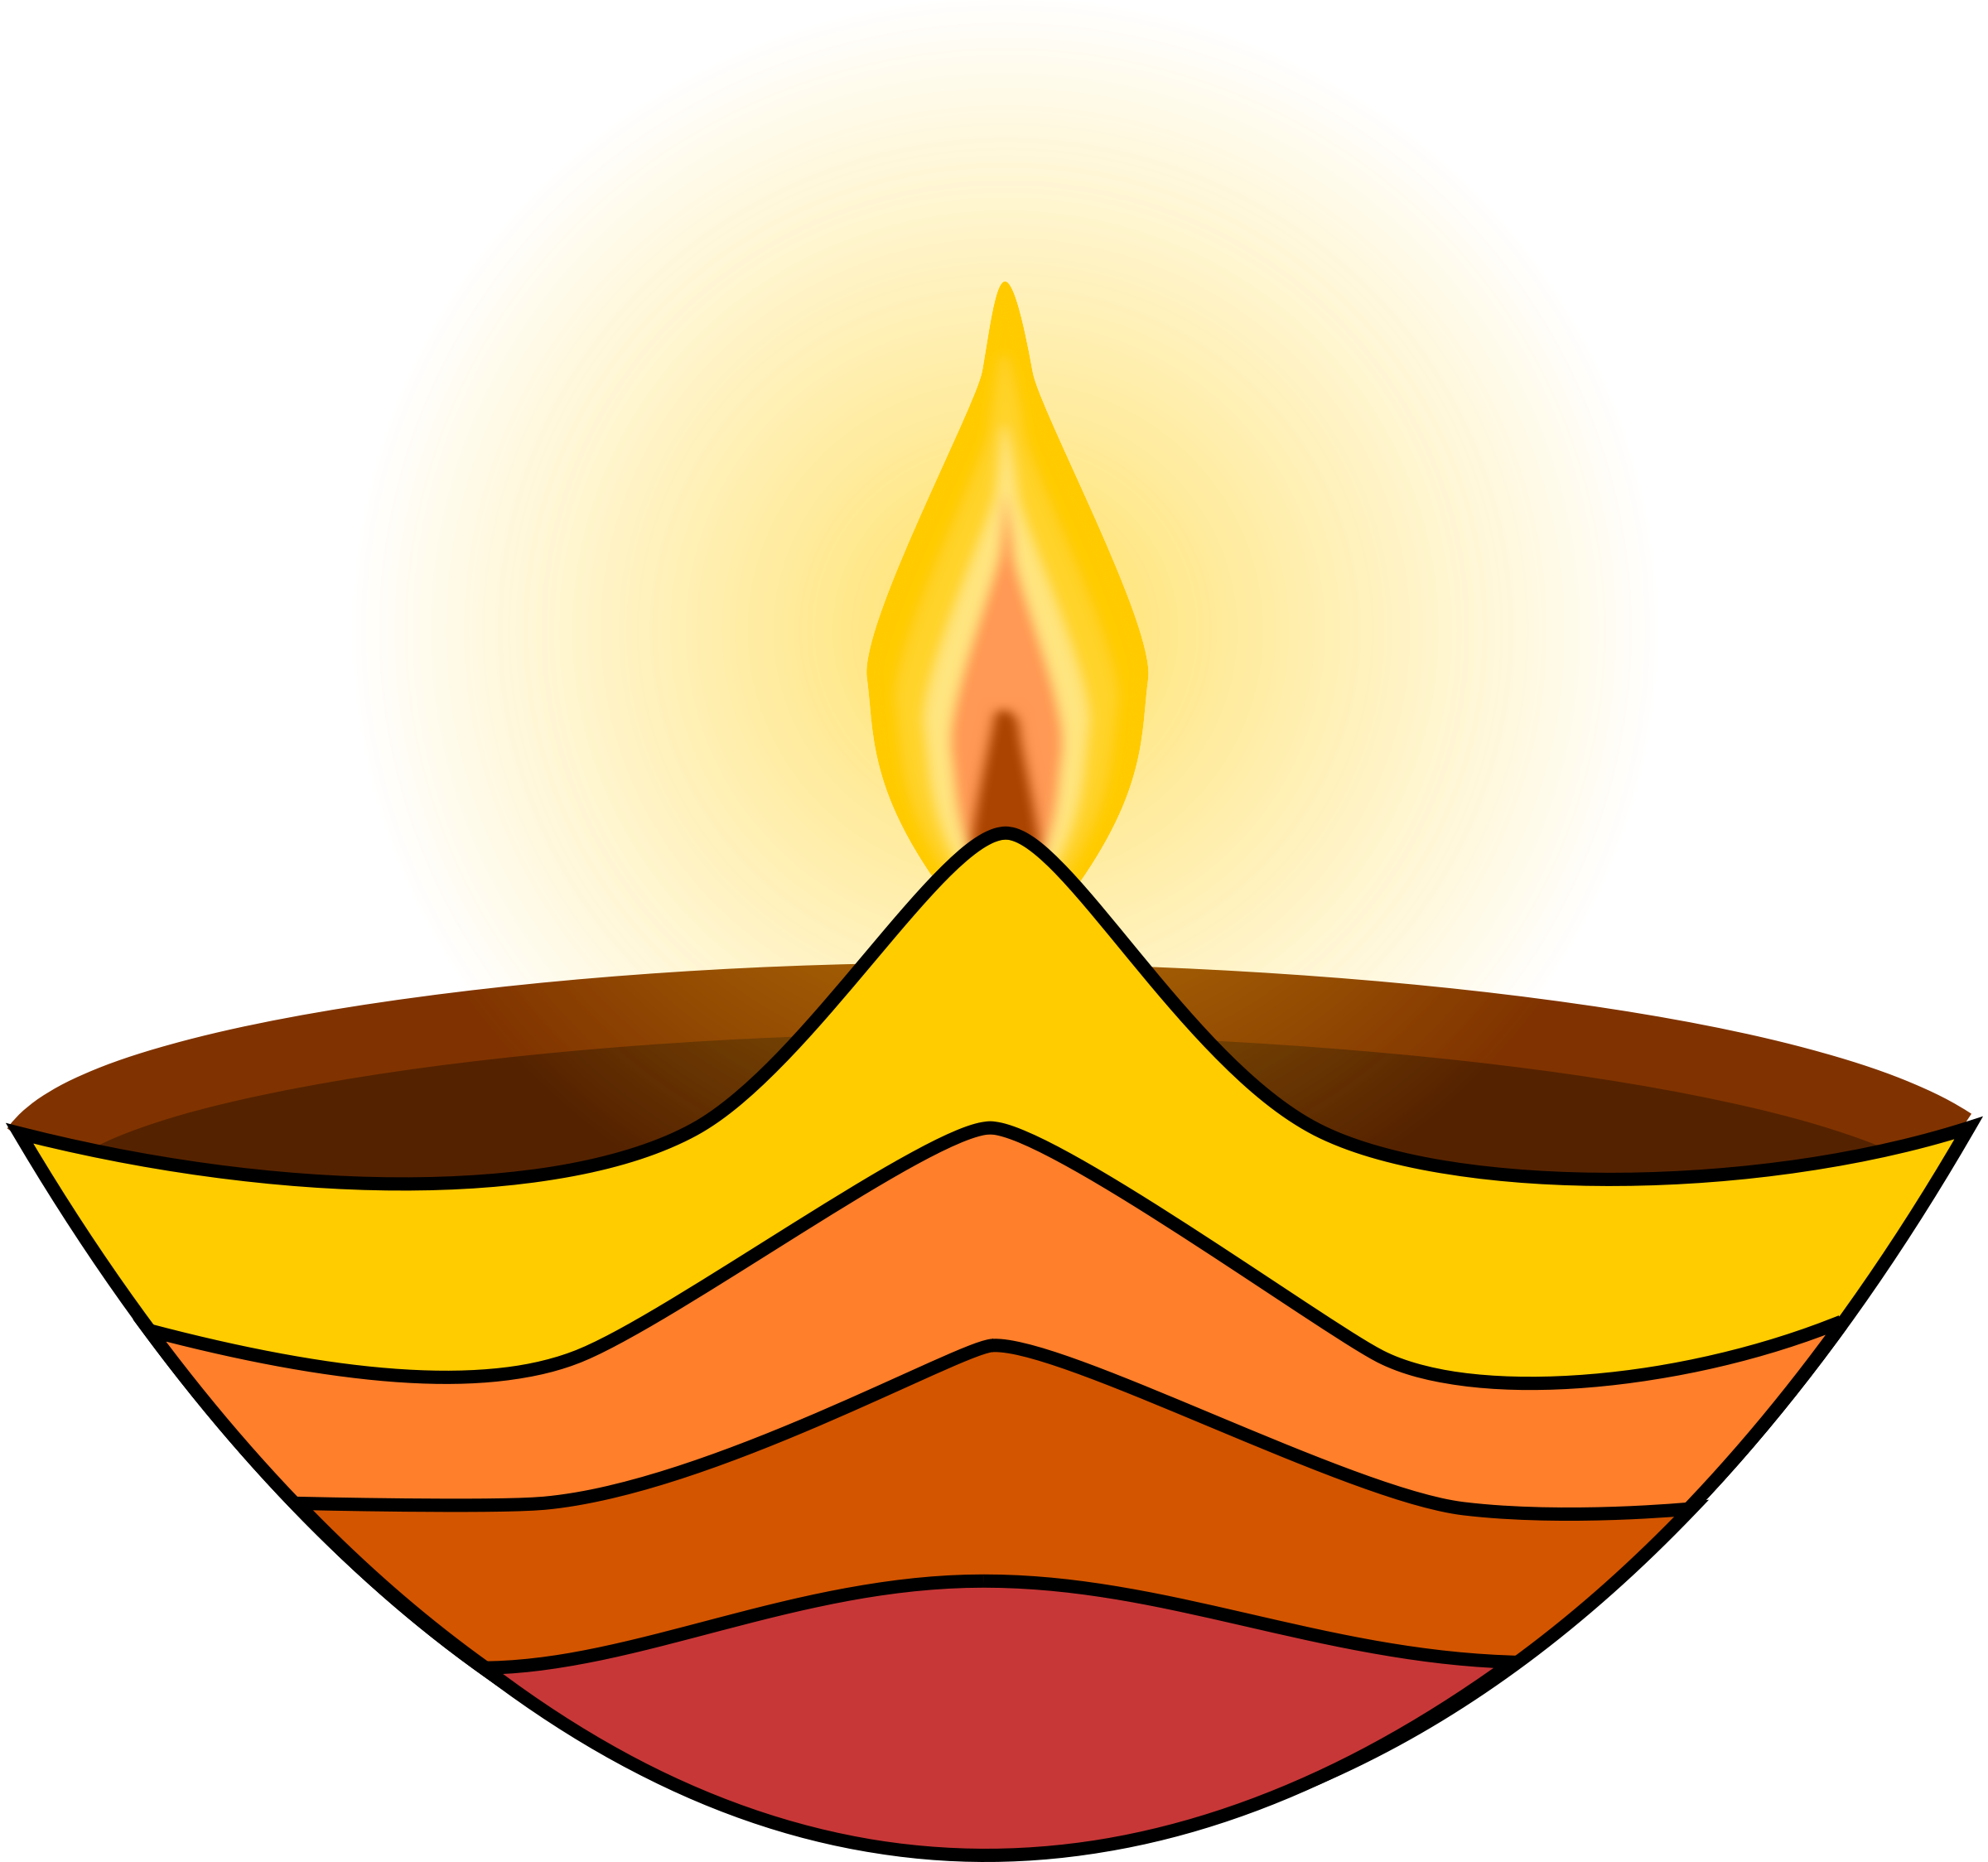 Images For > Diwali Deepak Logo